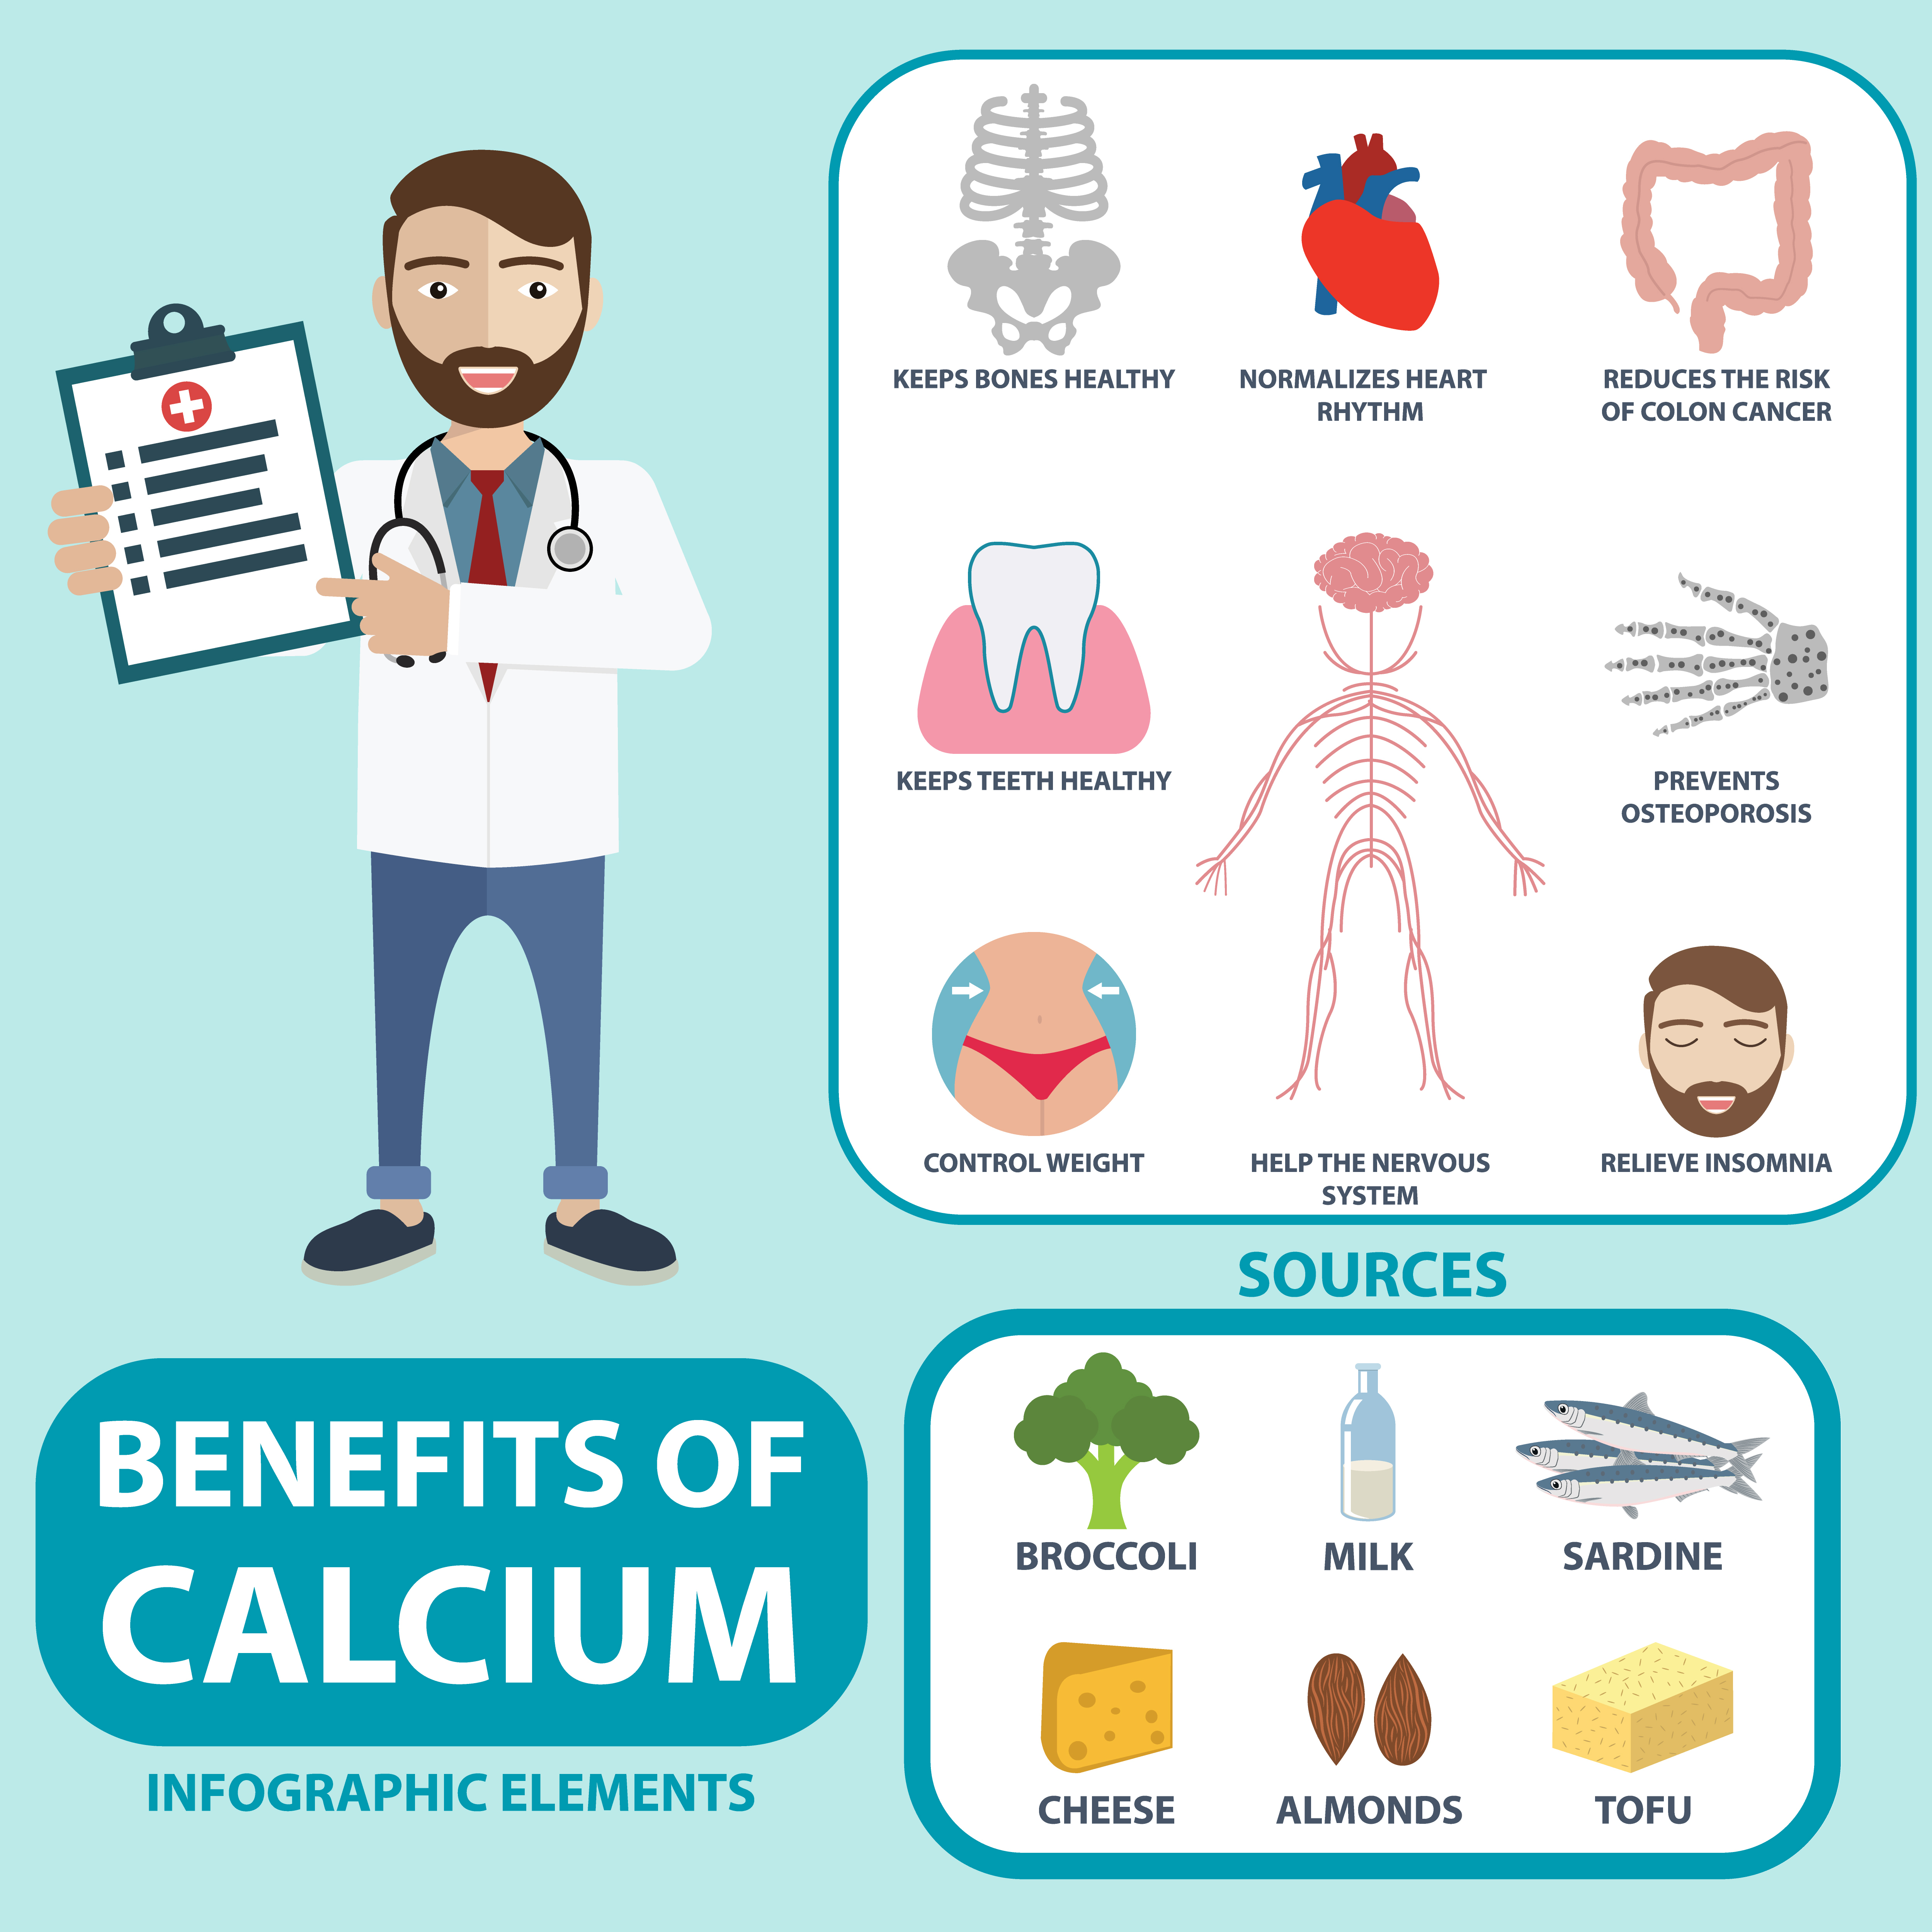 Most important benefits of calcium - infographic